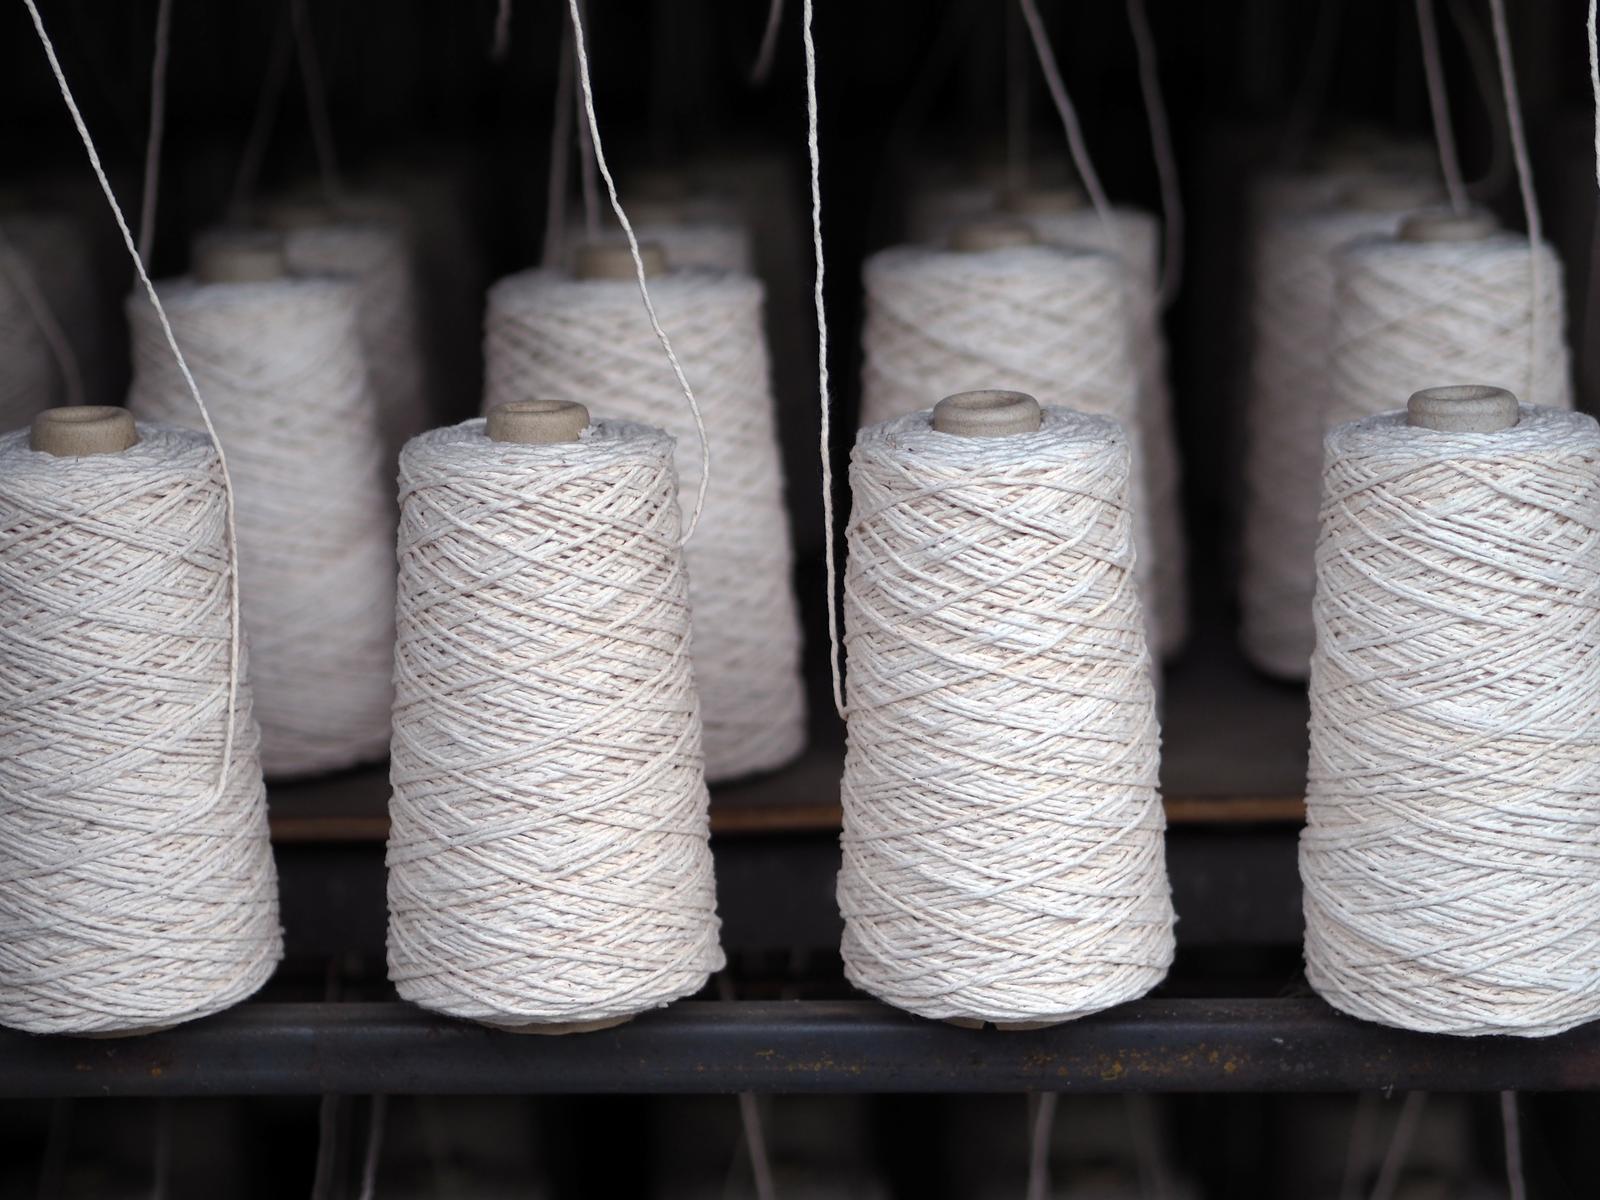 Preparation and spinning of textile fibres in Pärnu